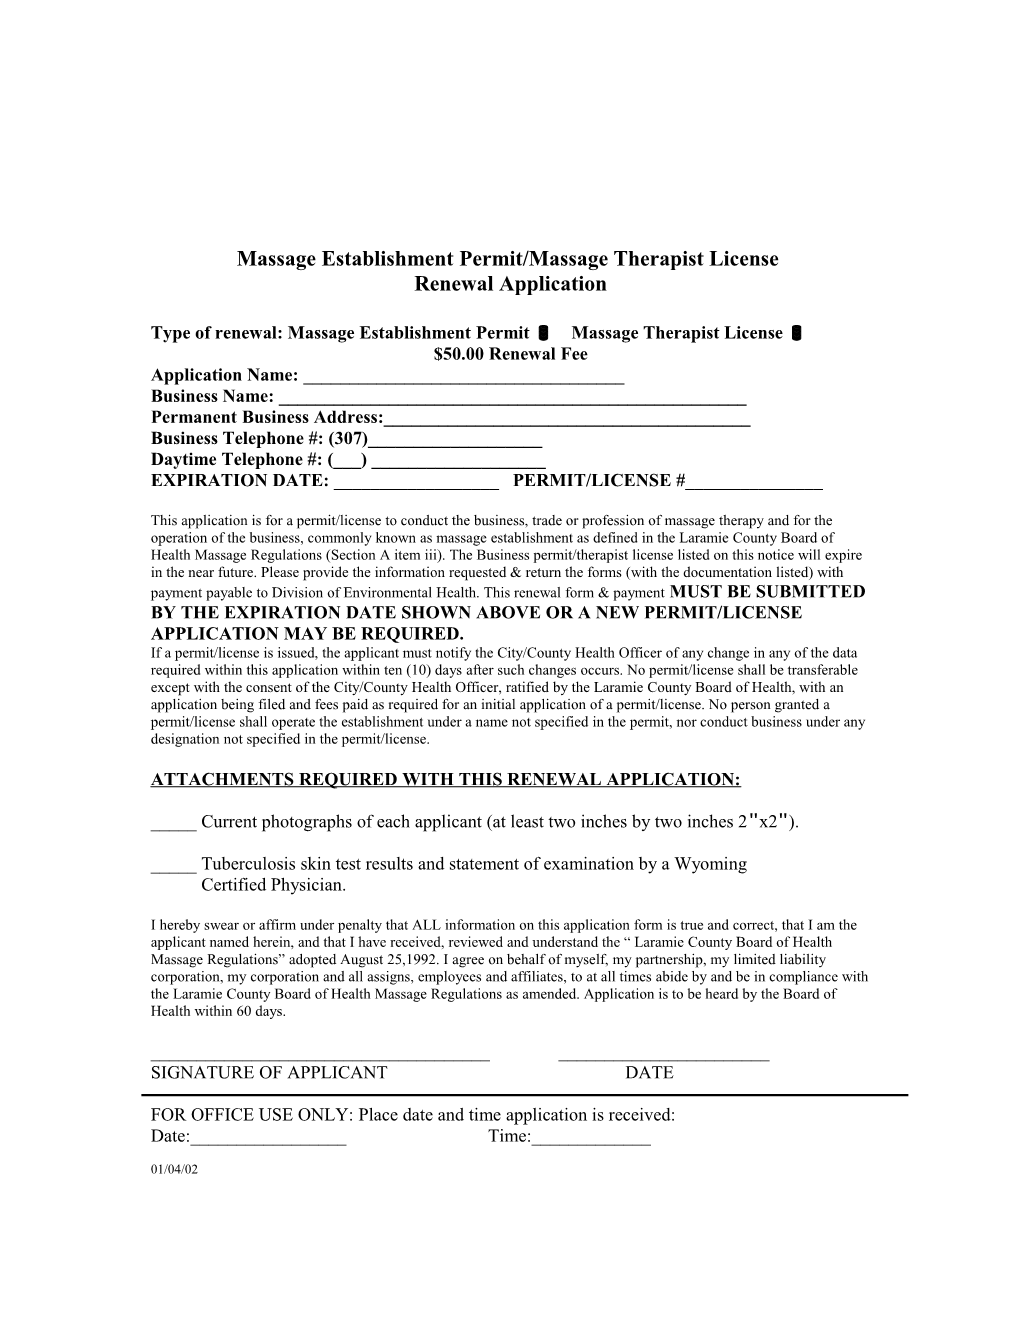 Massage Establishment Permit Renewal Application